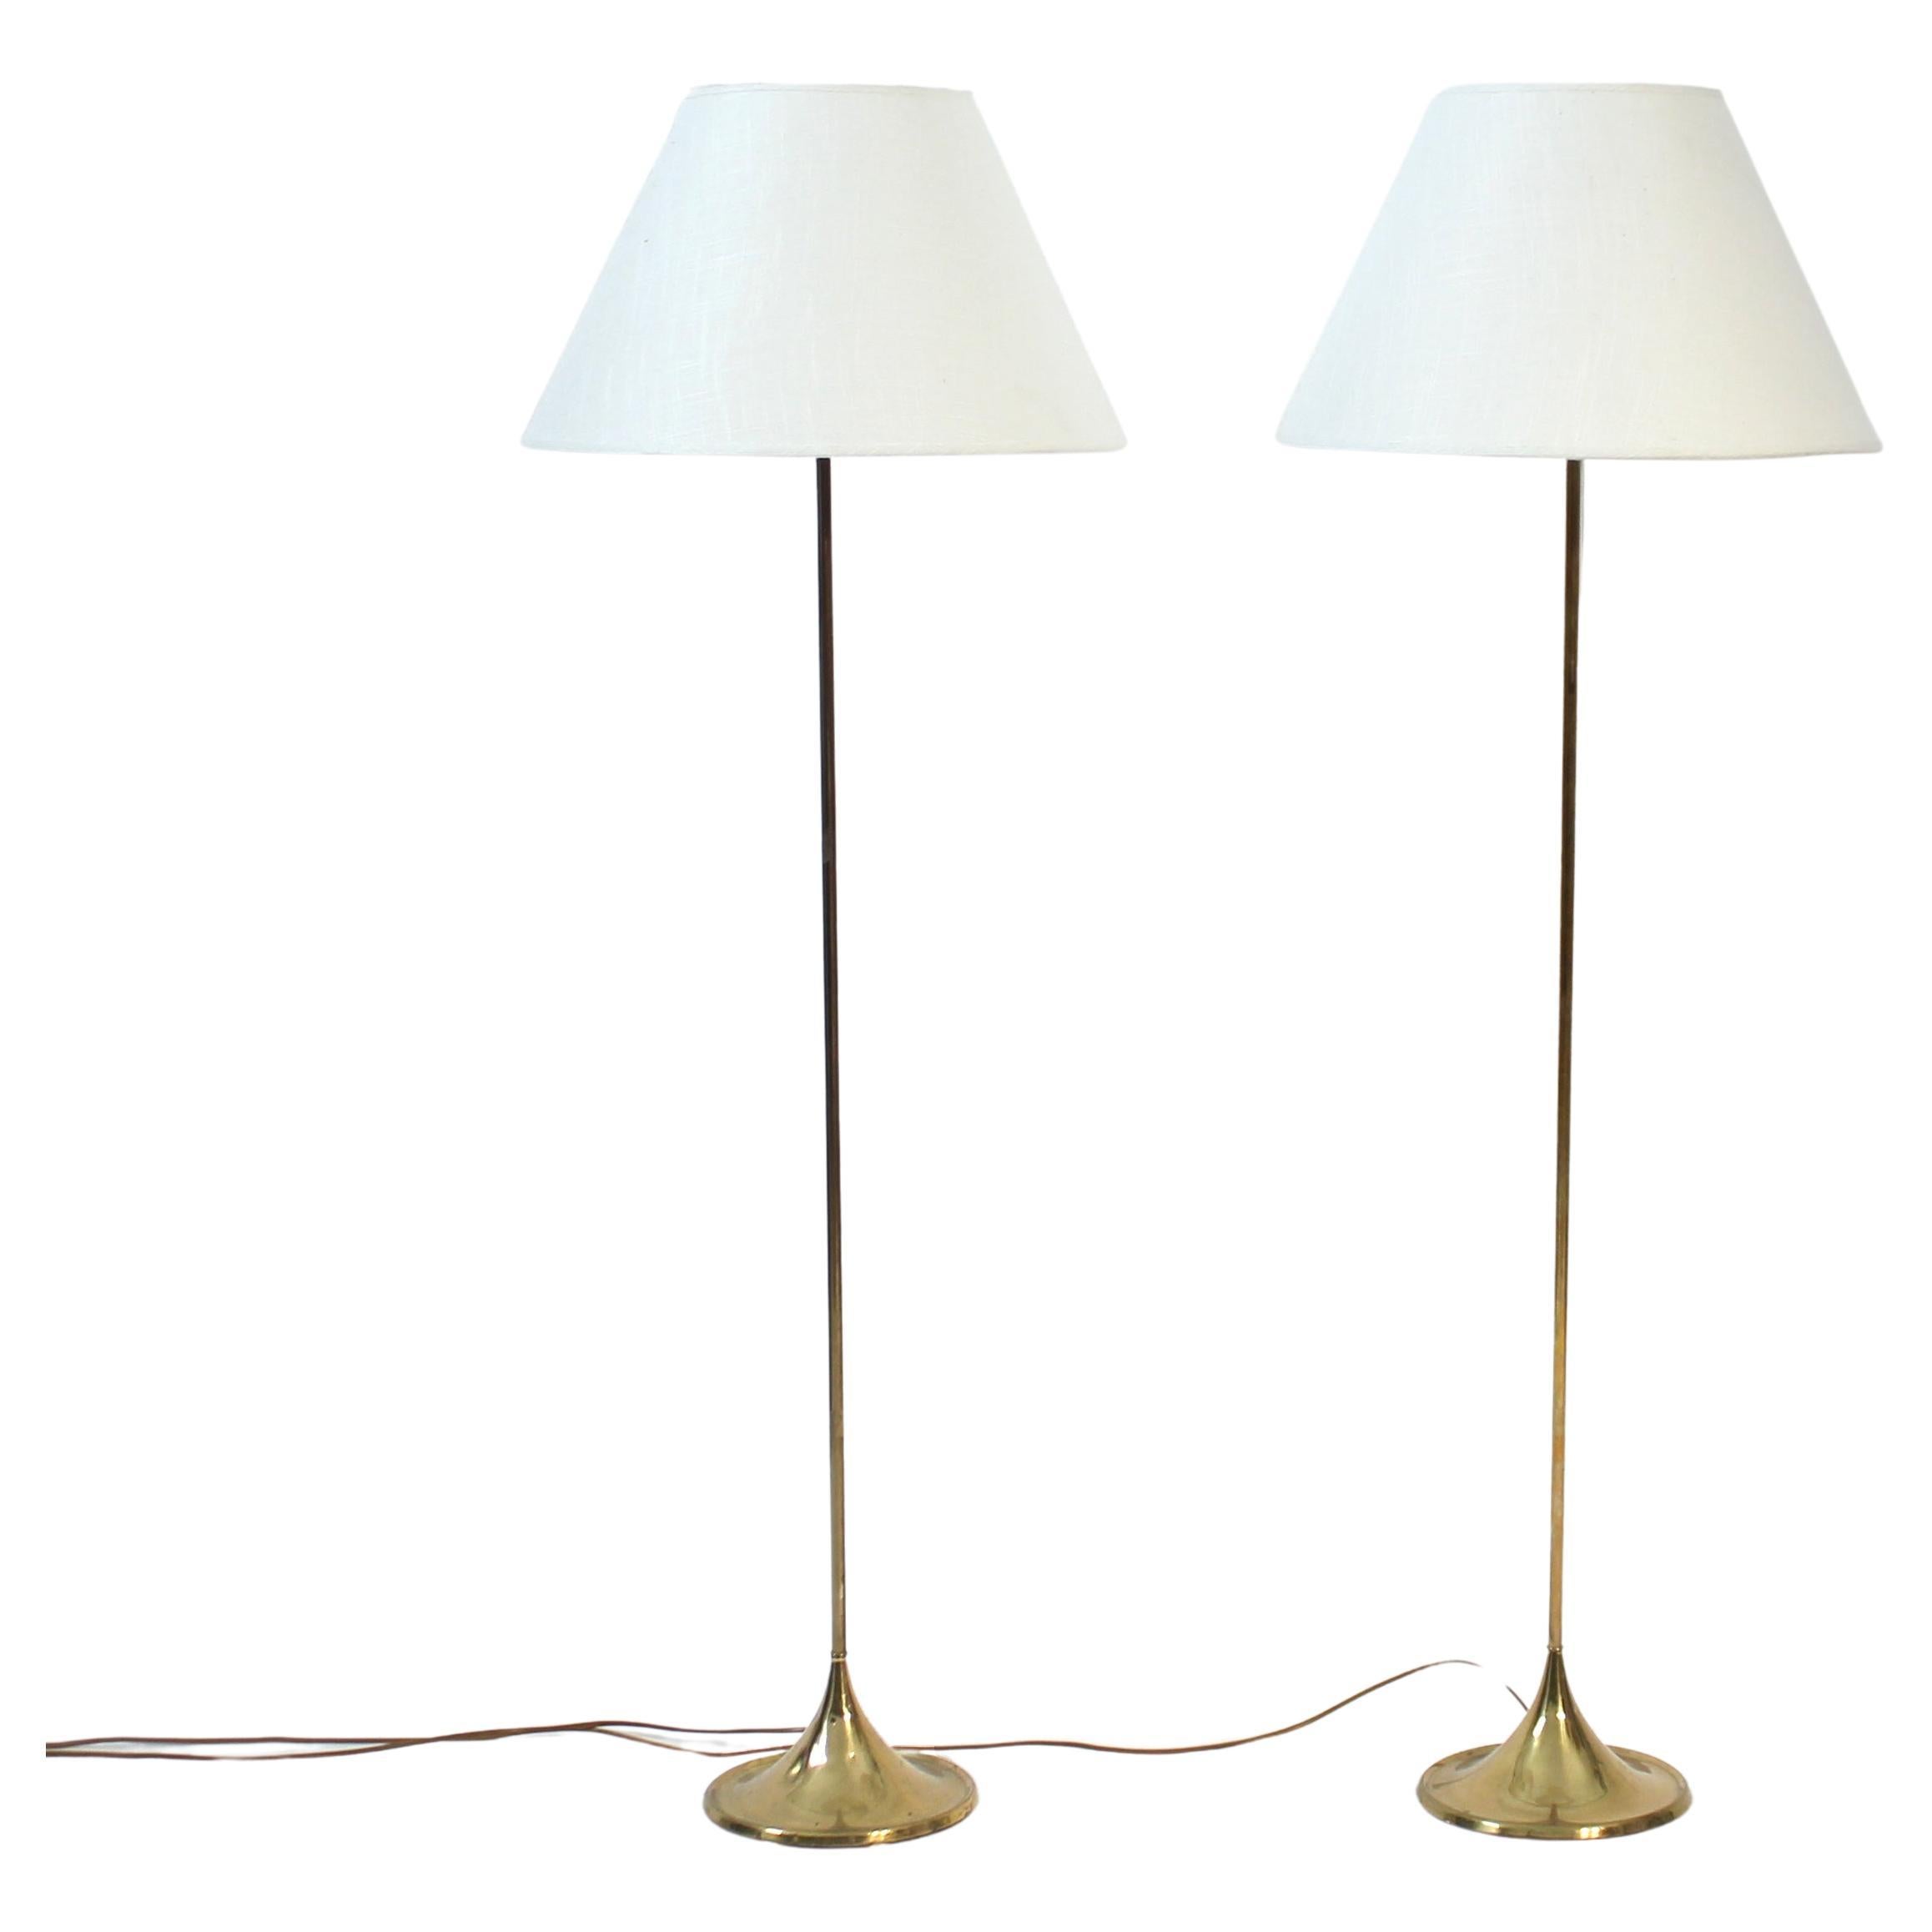 Bergboms Floor Lamps